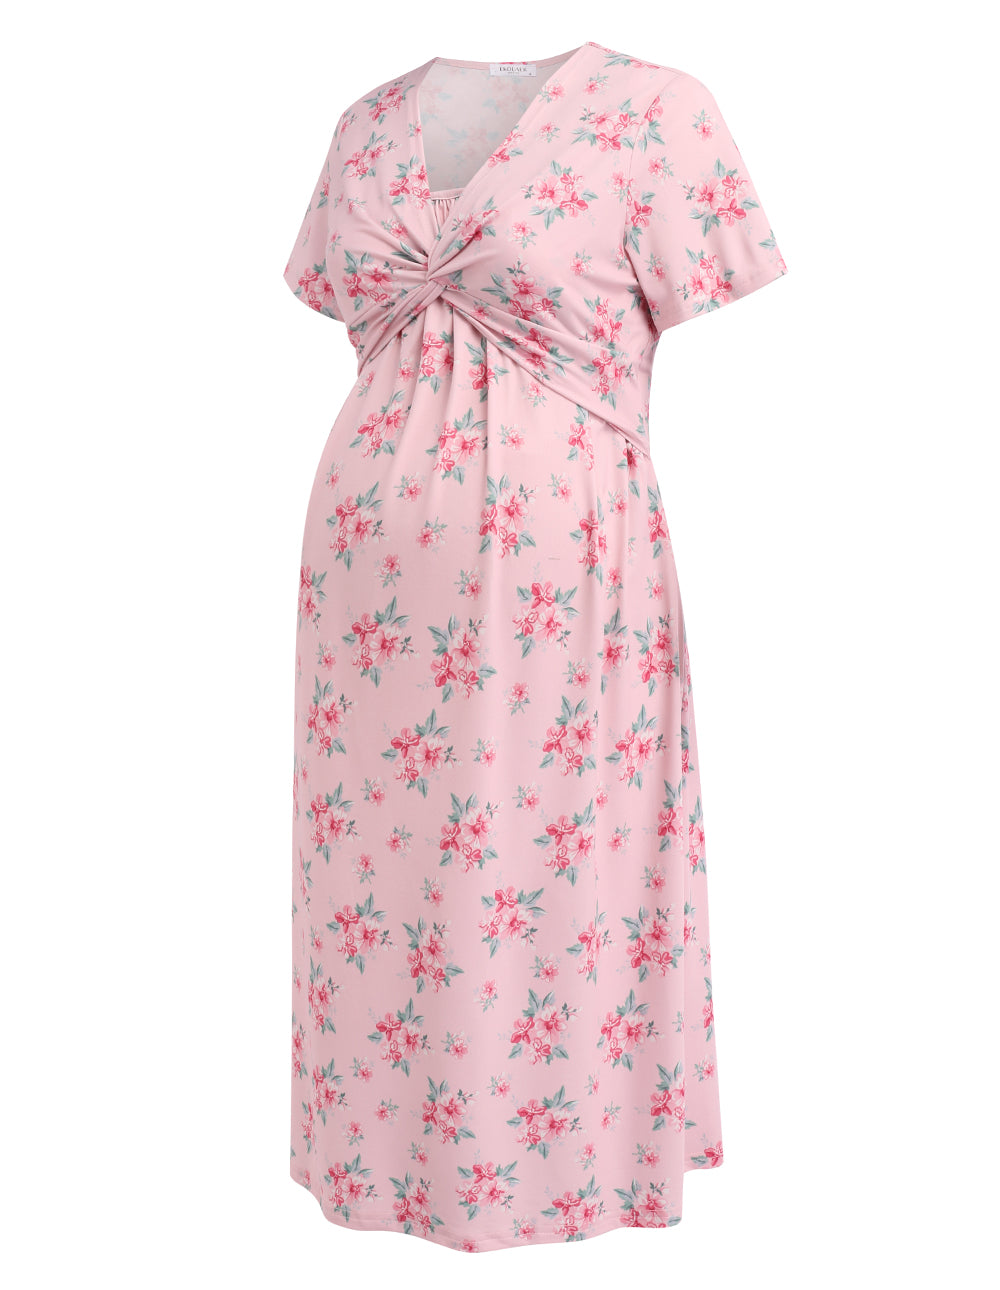 Ekouaer Short Sleeve Floral Maternity Nursing Dress